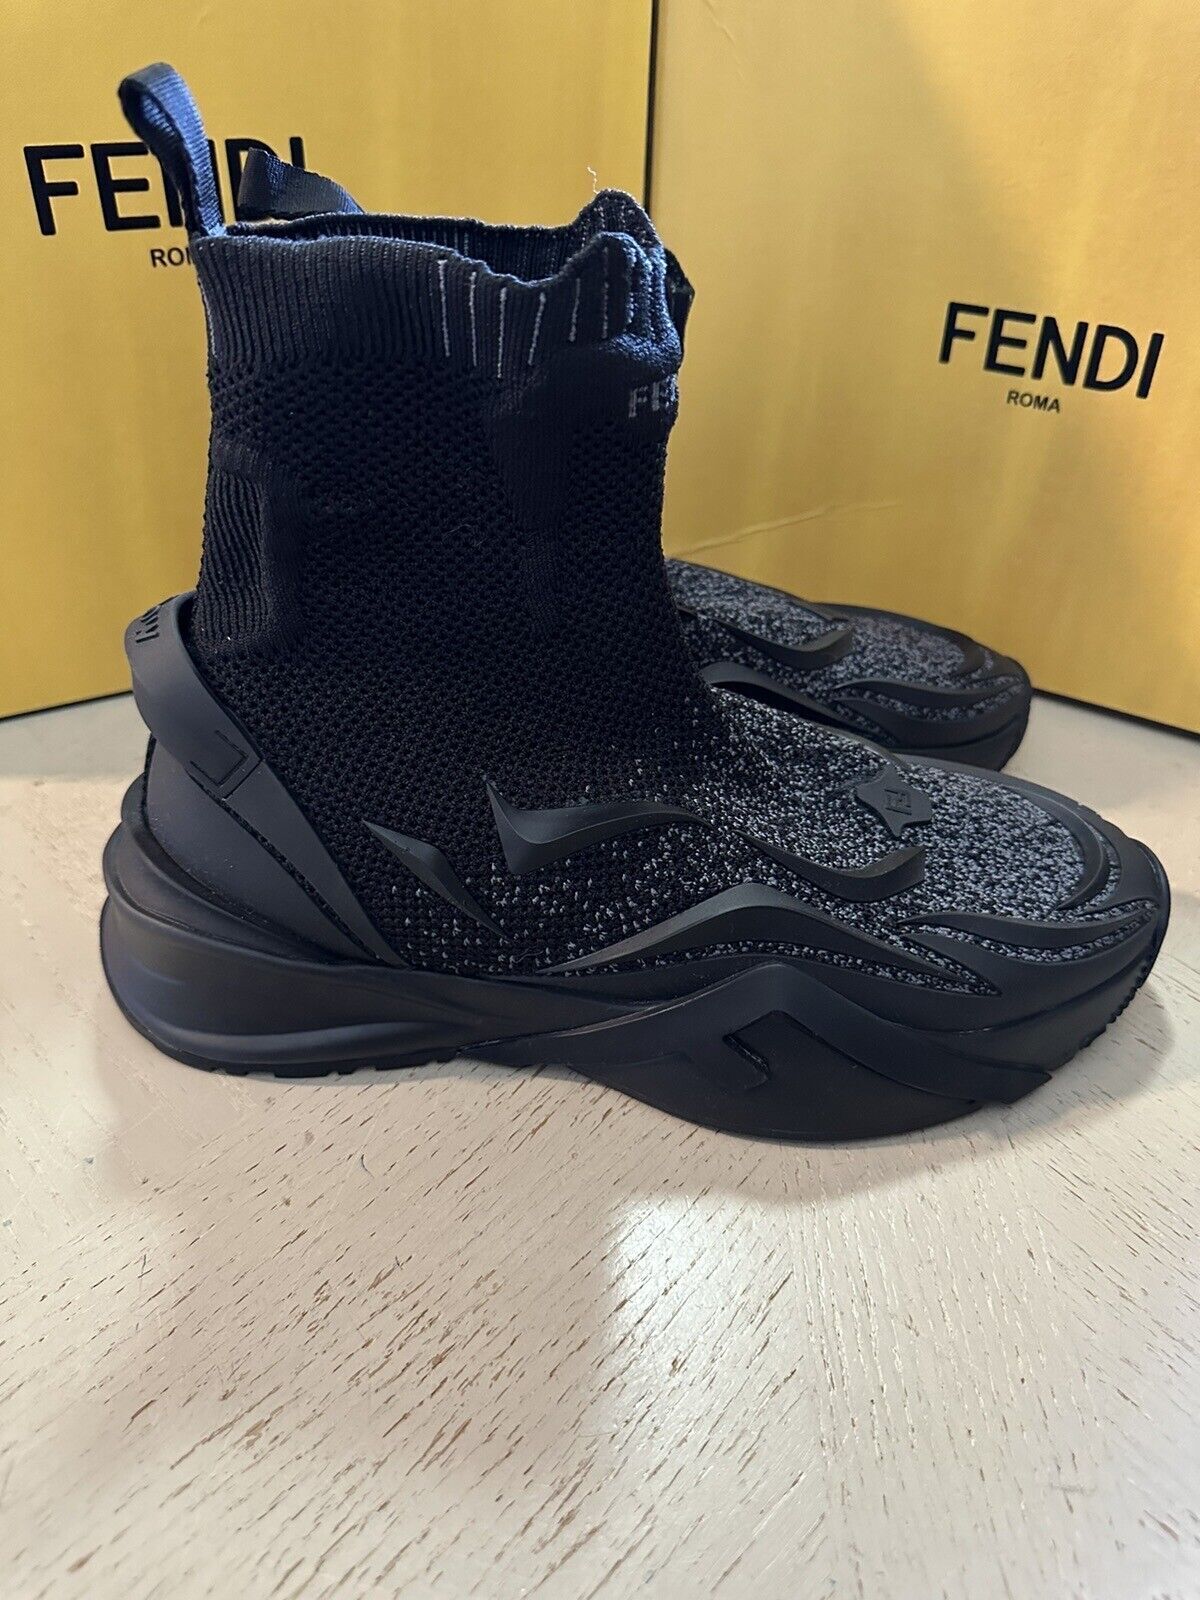 Fendi Contrast Knit High Top Sock Sneakers Shoes Black 14 US 7E1554 NIB $1190